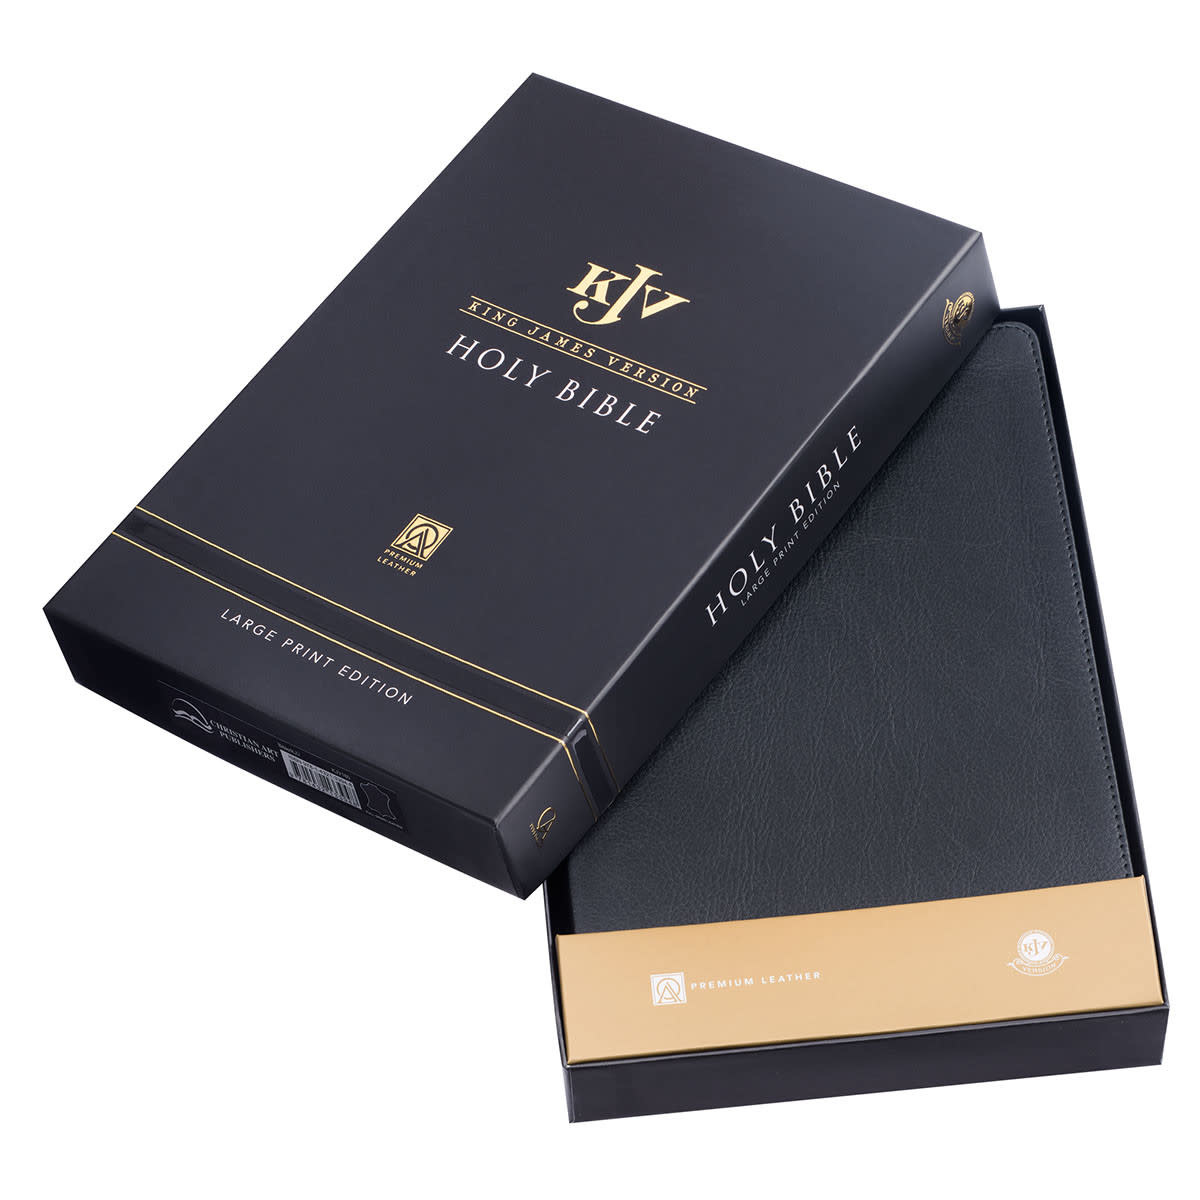 david balas recommends bible black complete version pic